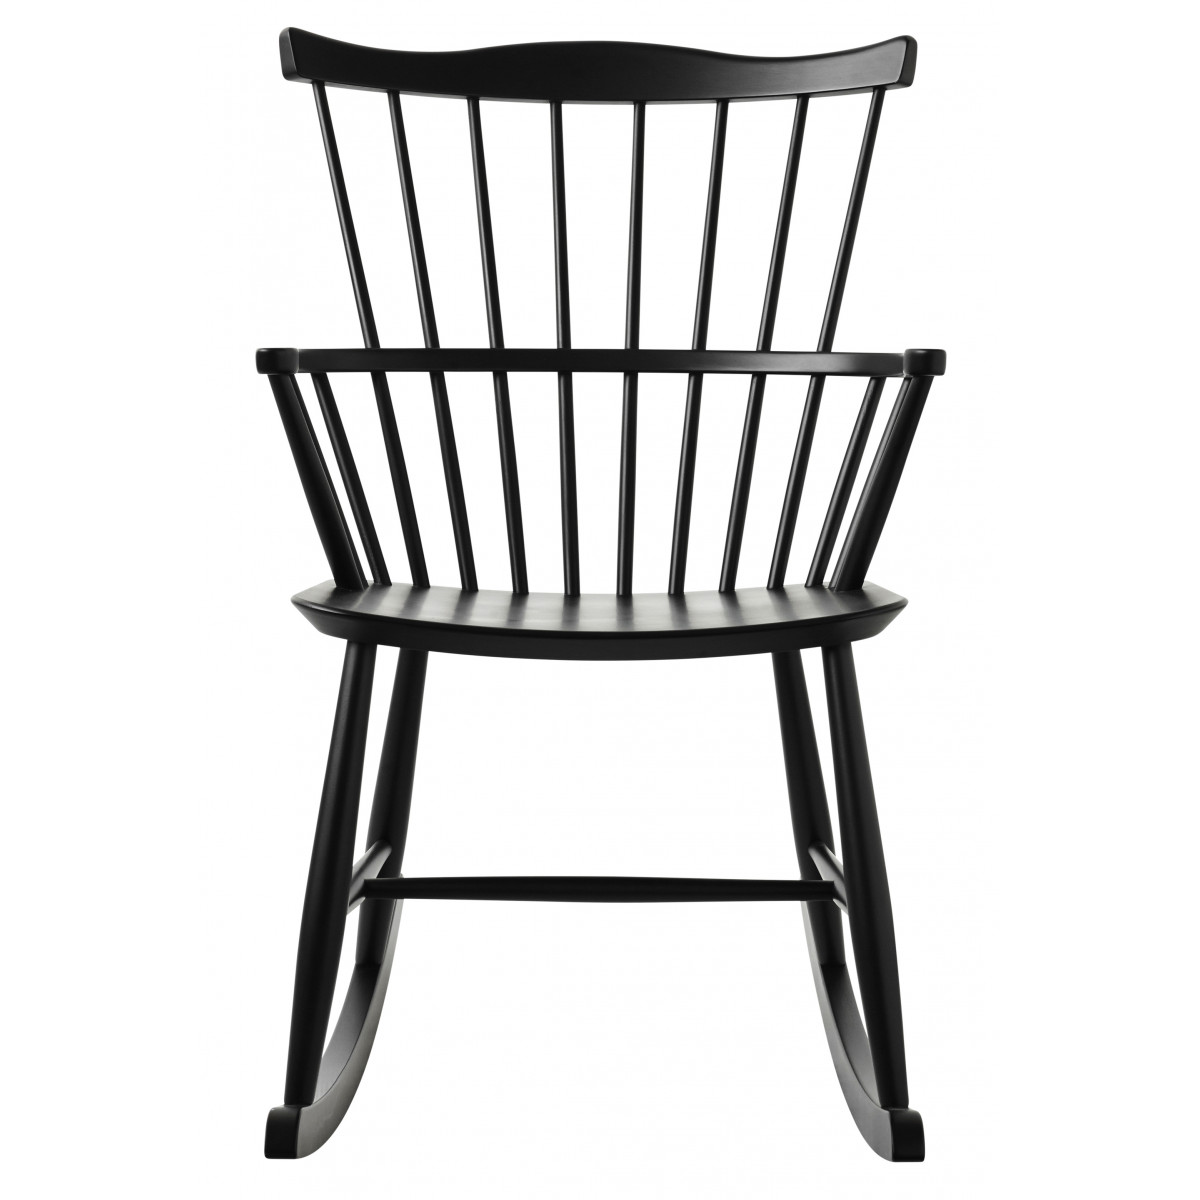 black - J52G rocking chair